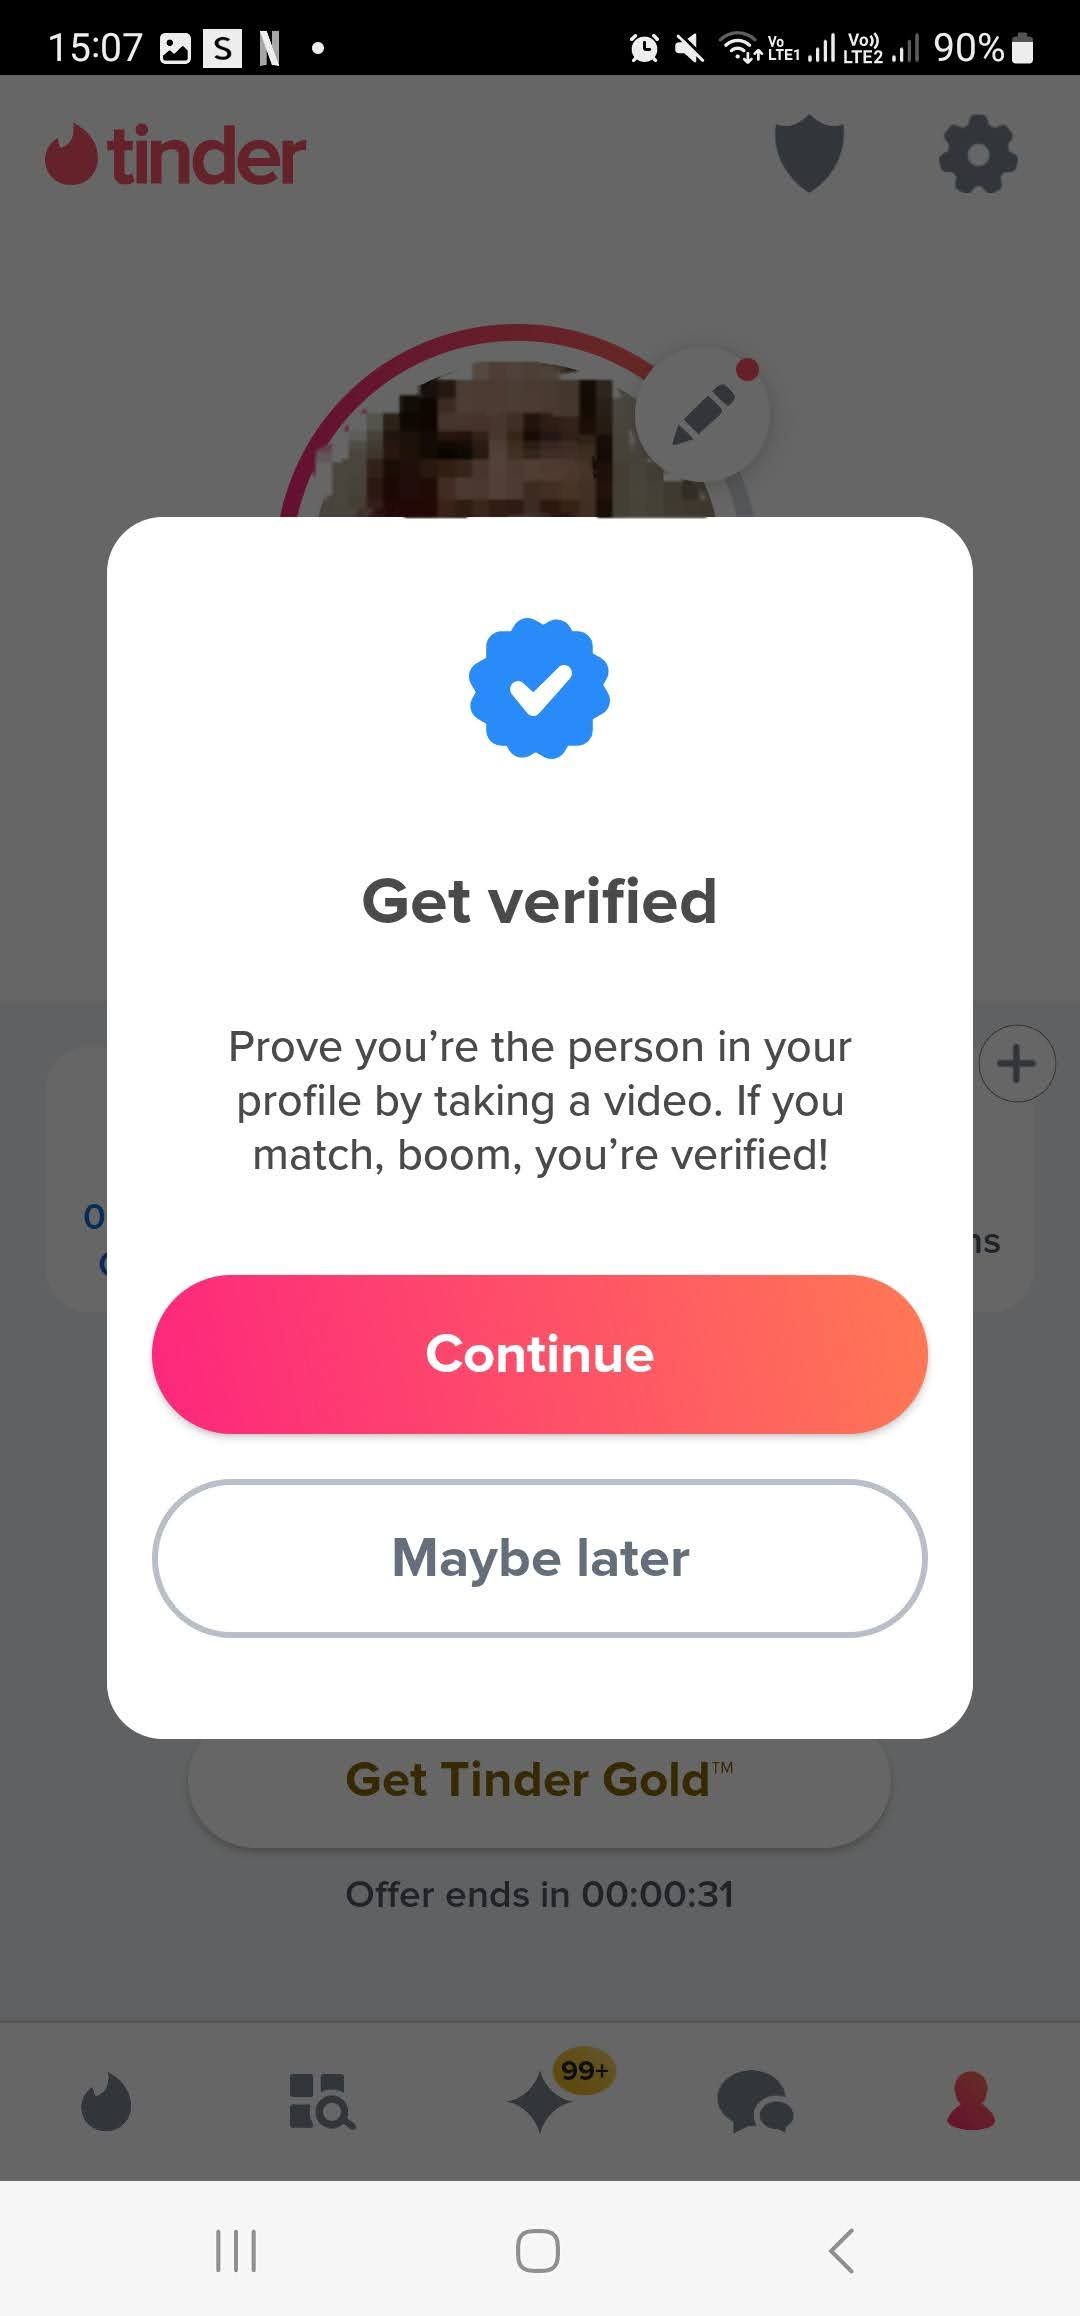 tinder get verified prompt